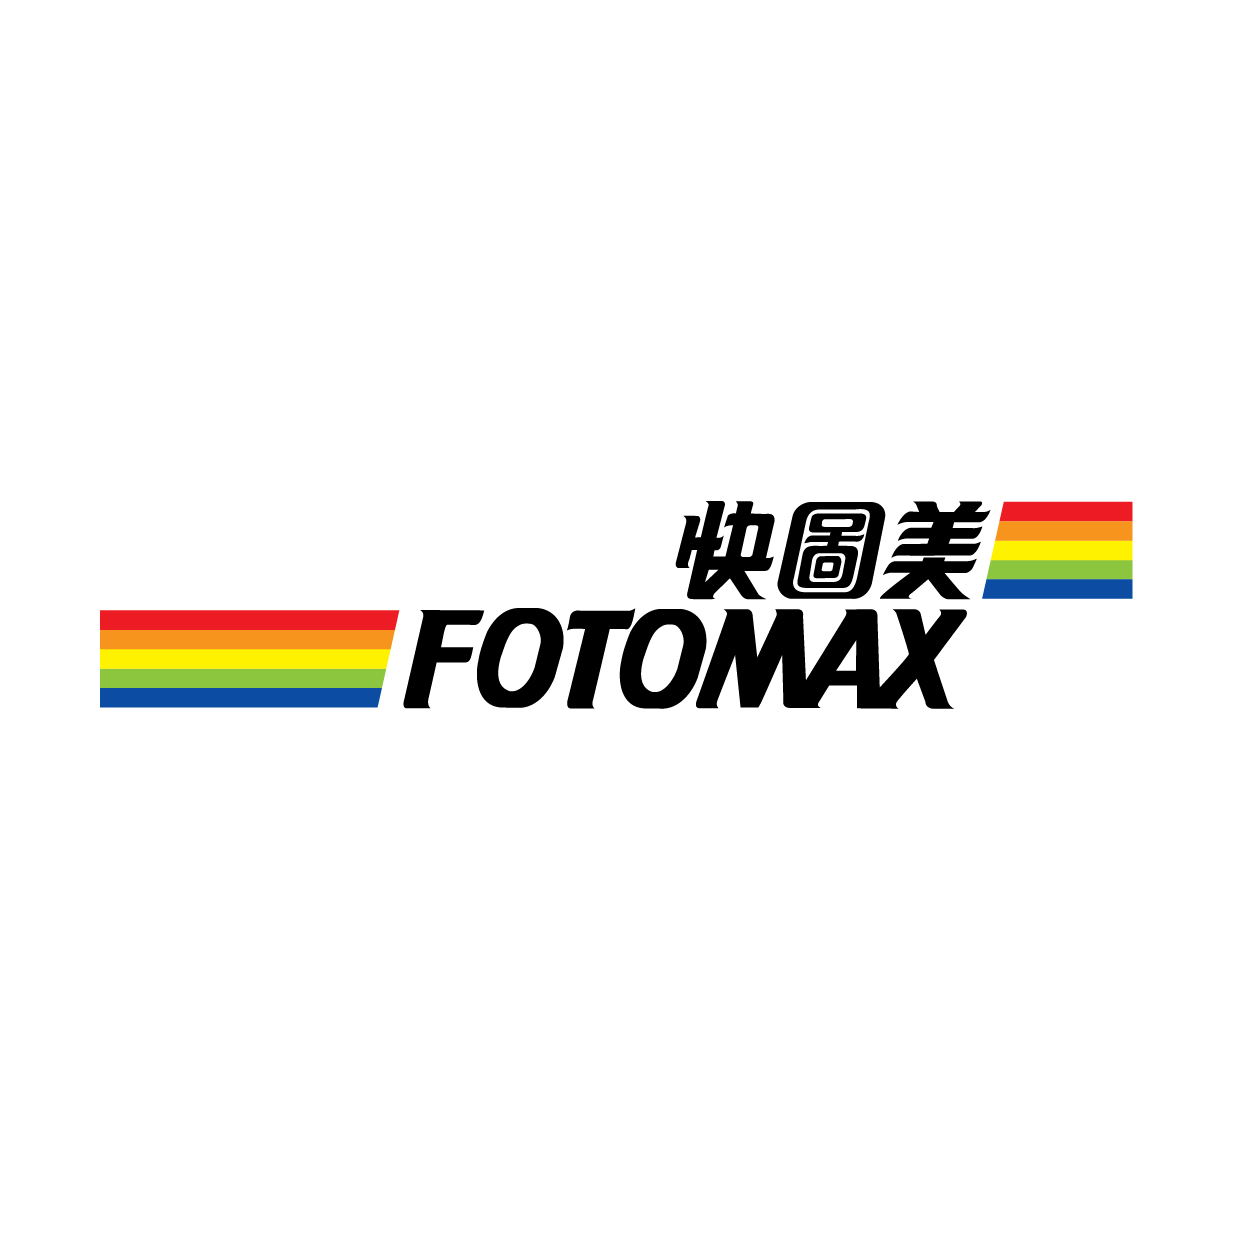 Fotomax